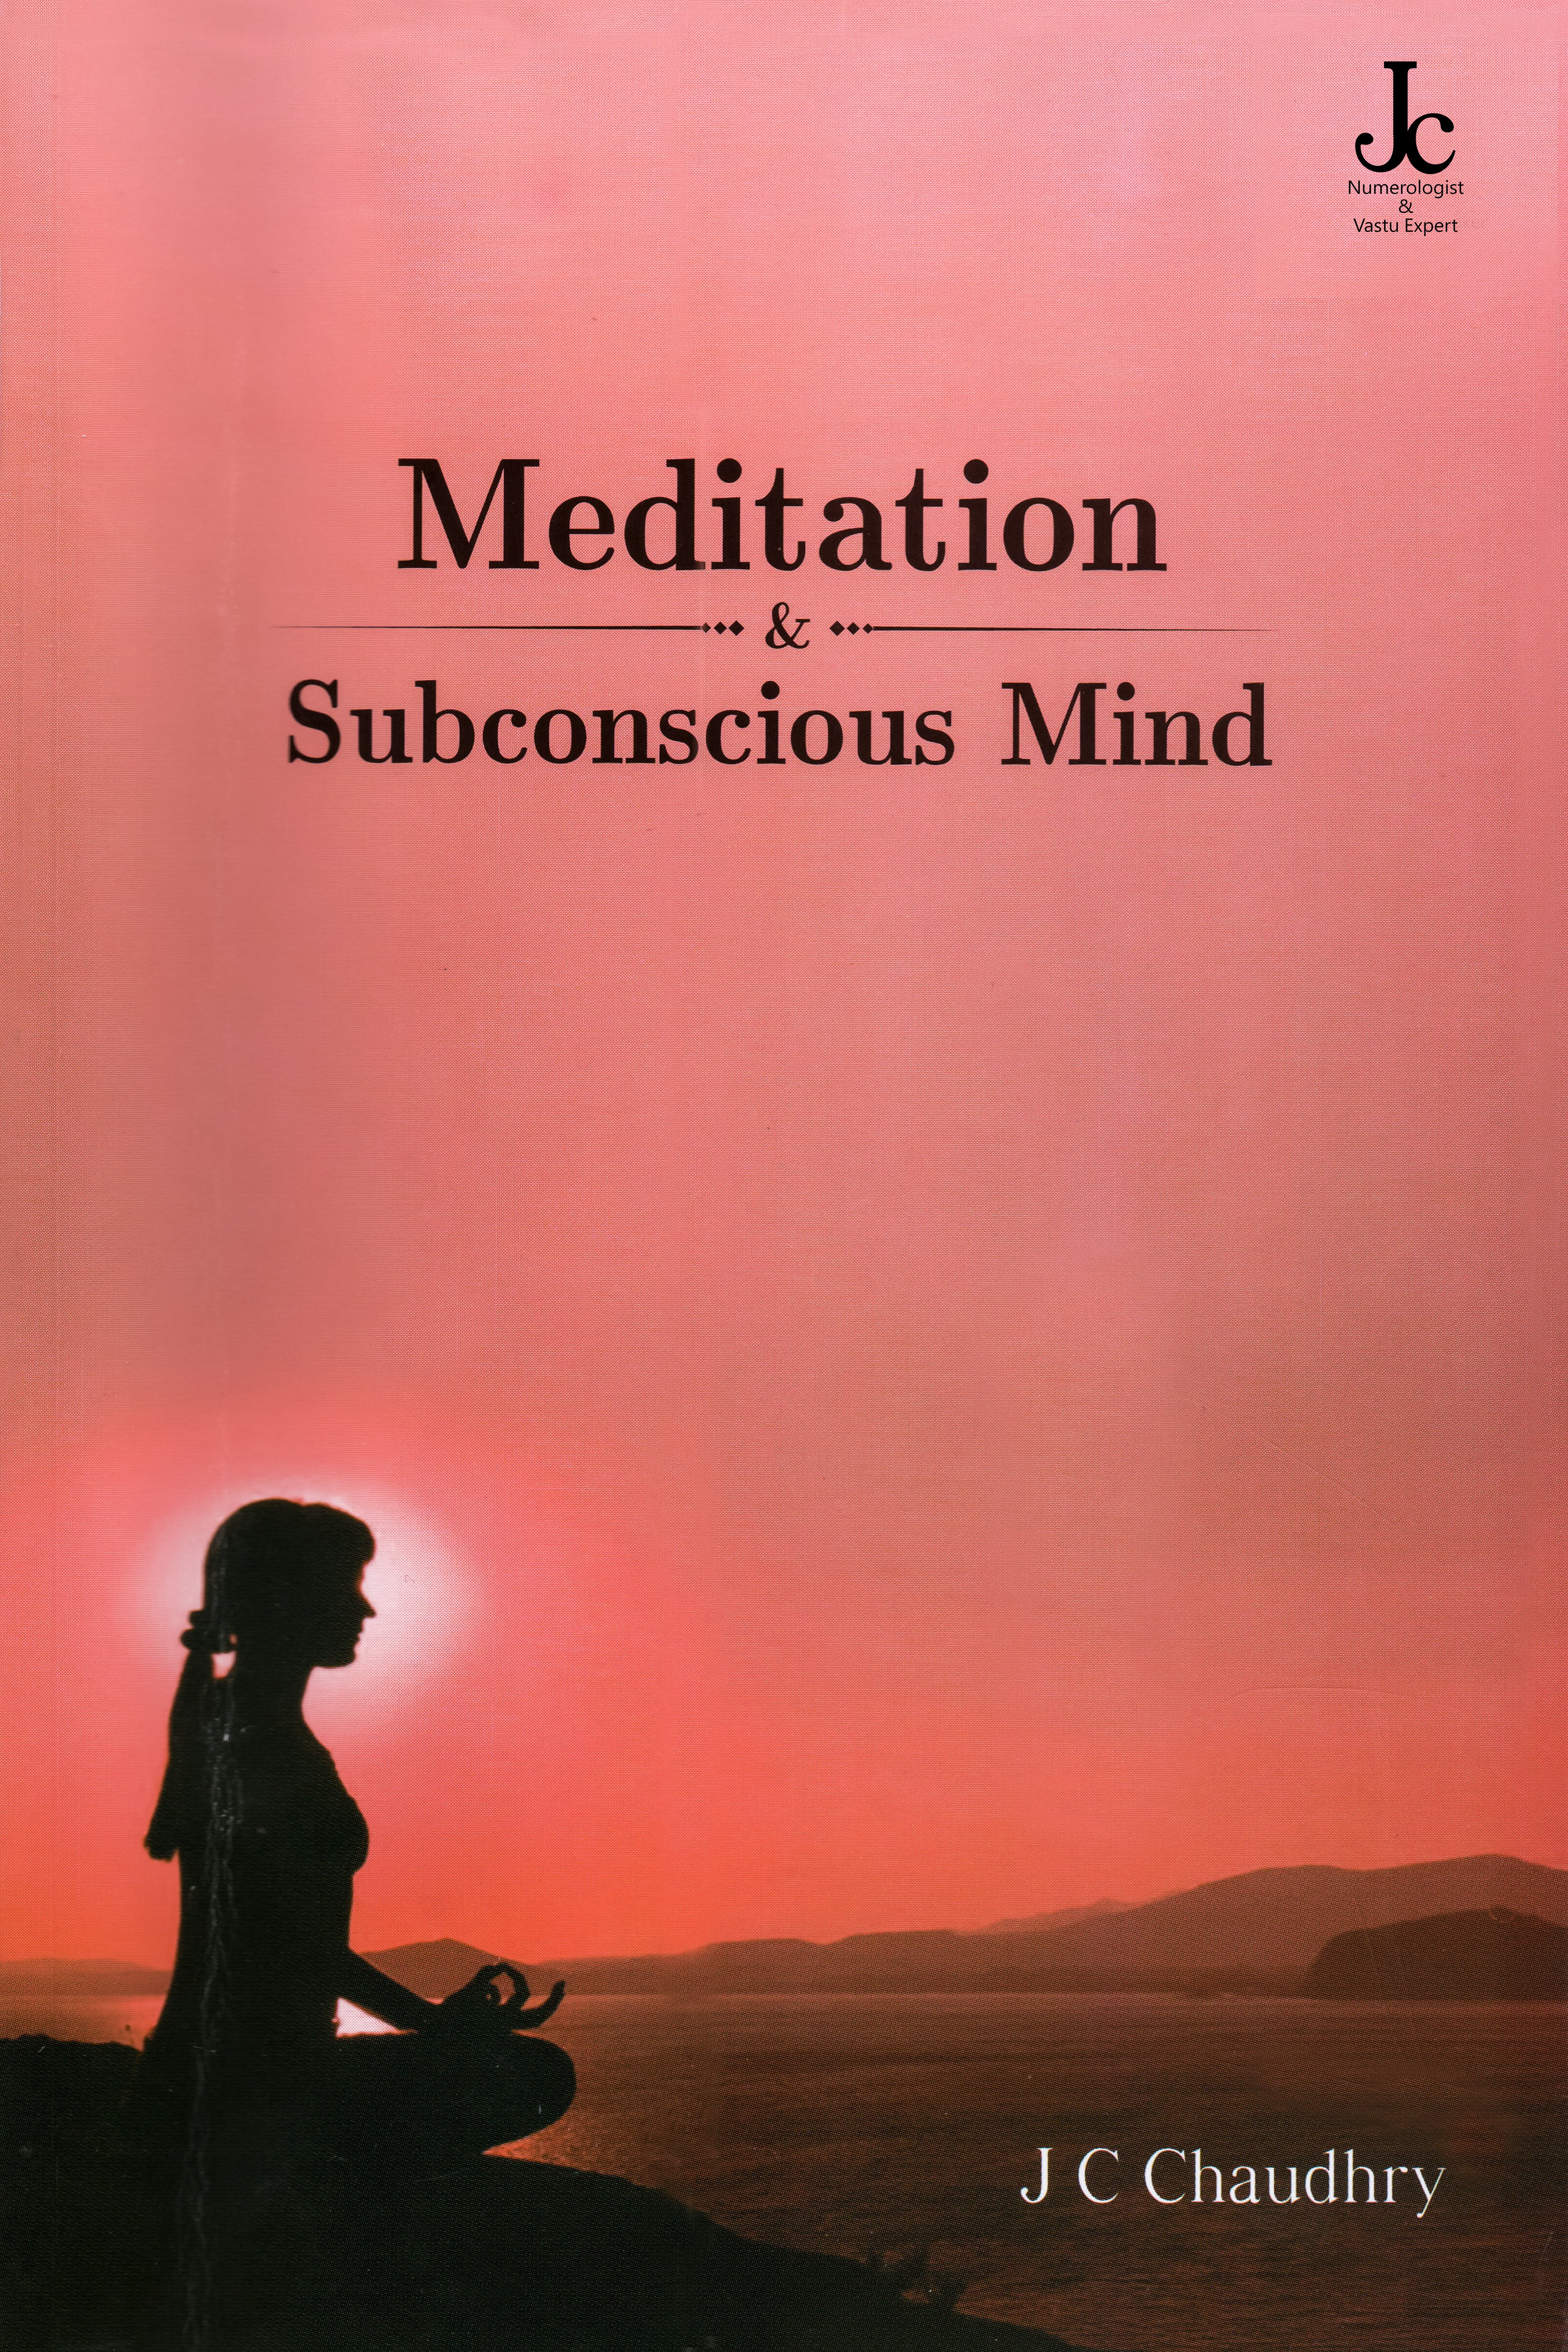 Meditation & Subconscious Mind, Methods of doing mediationa book